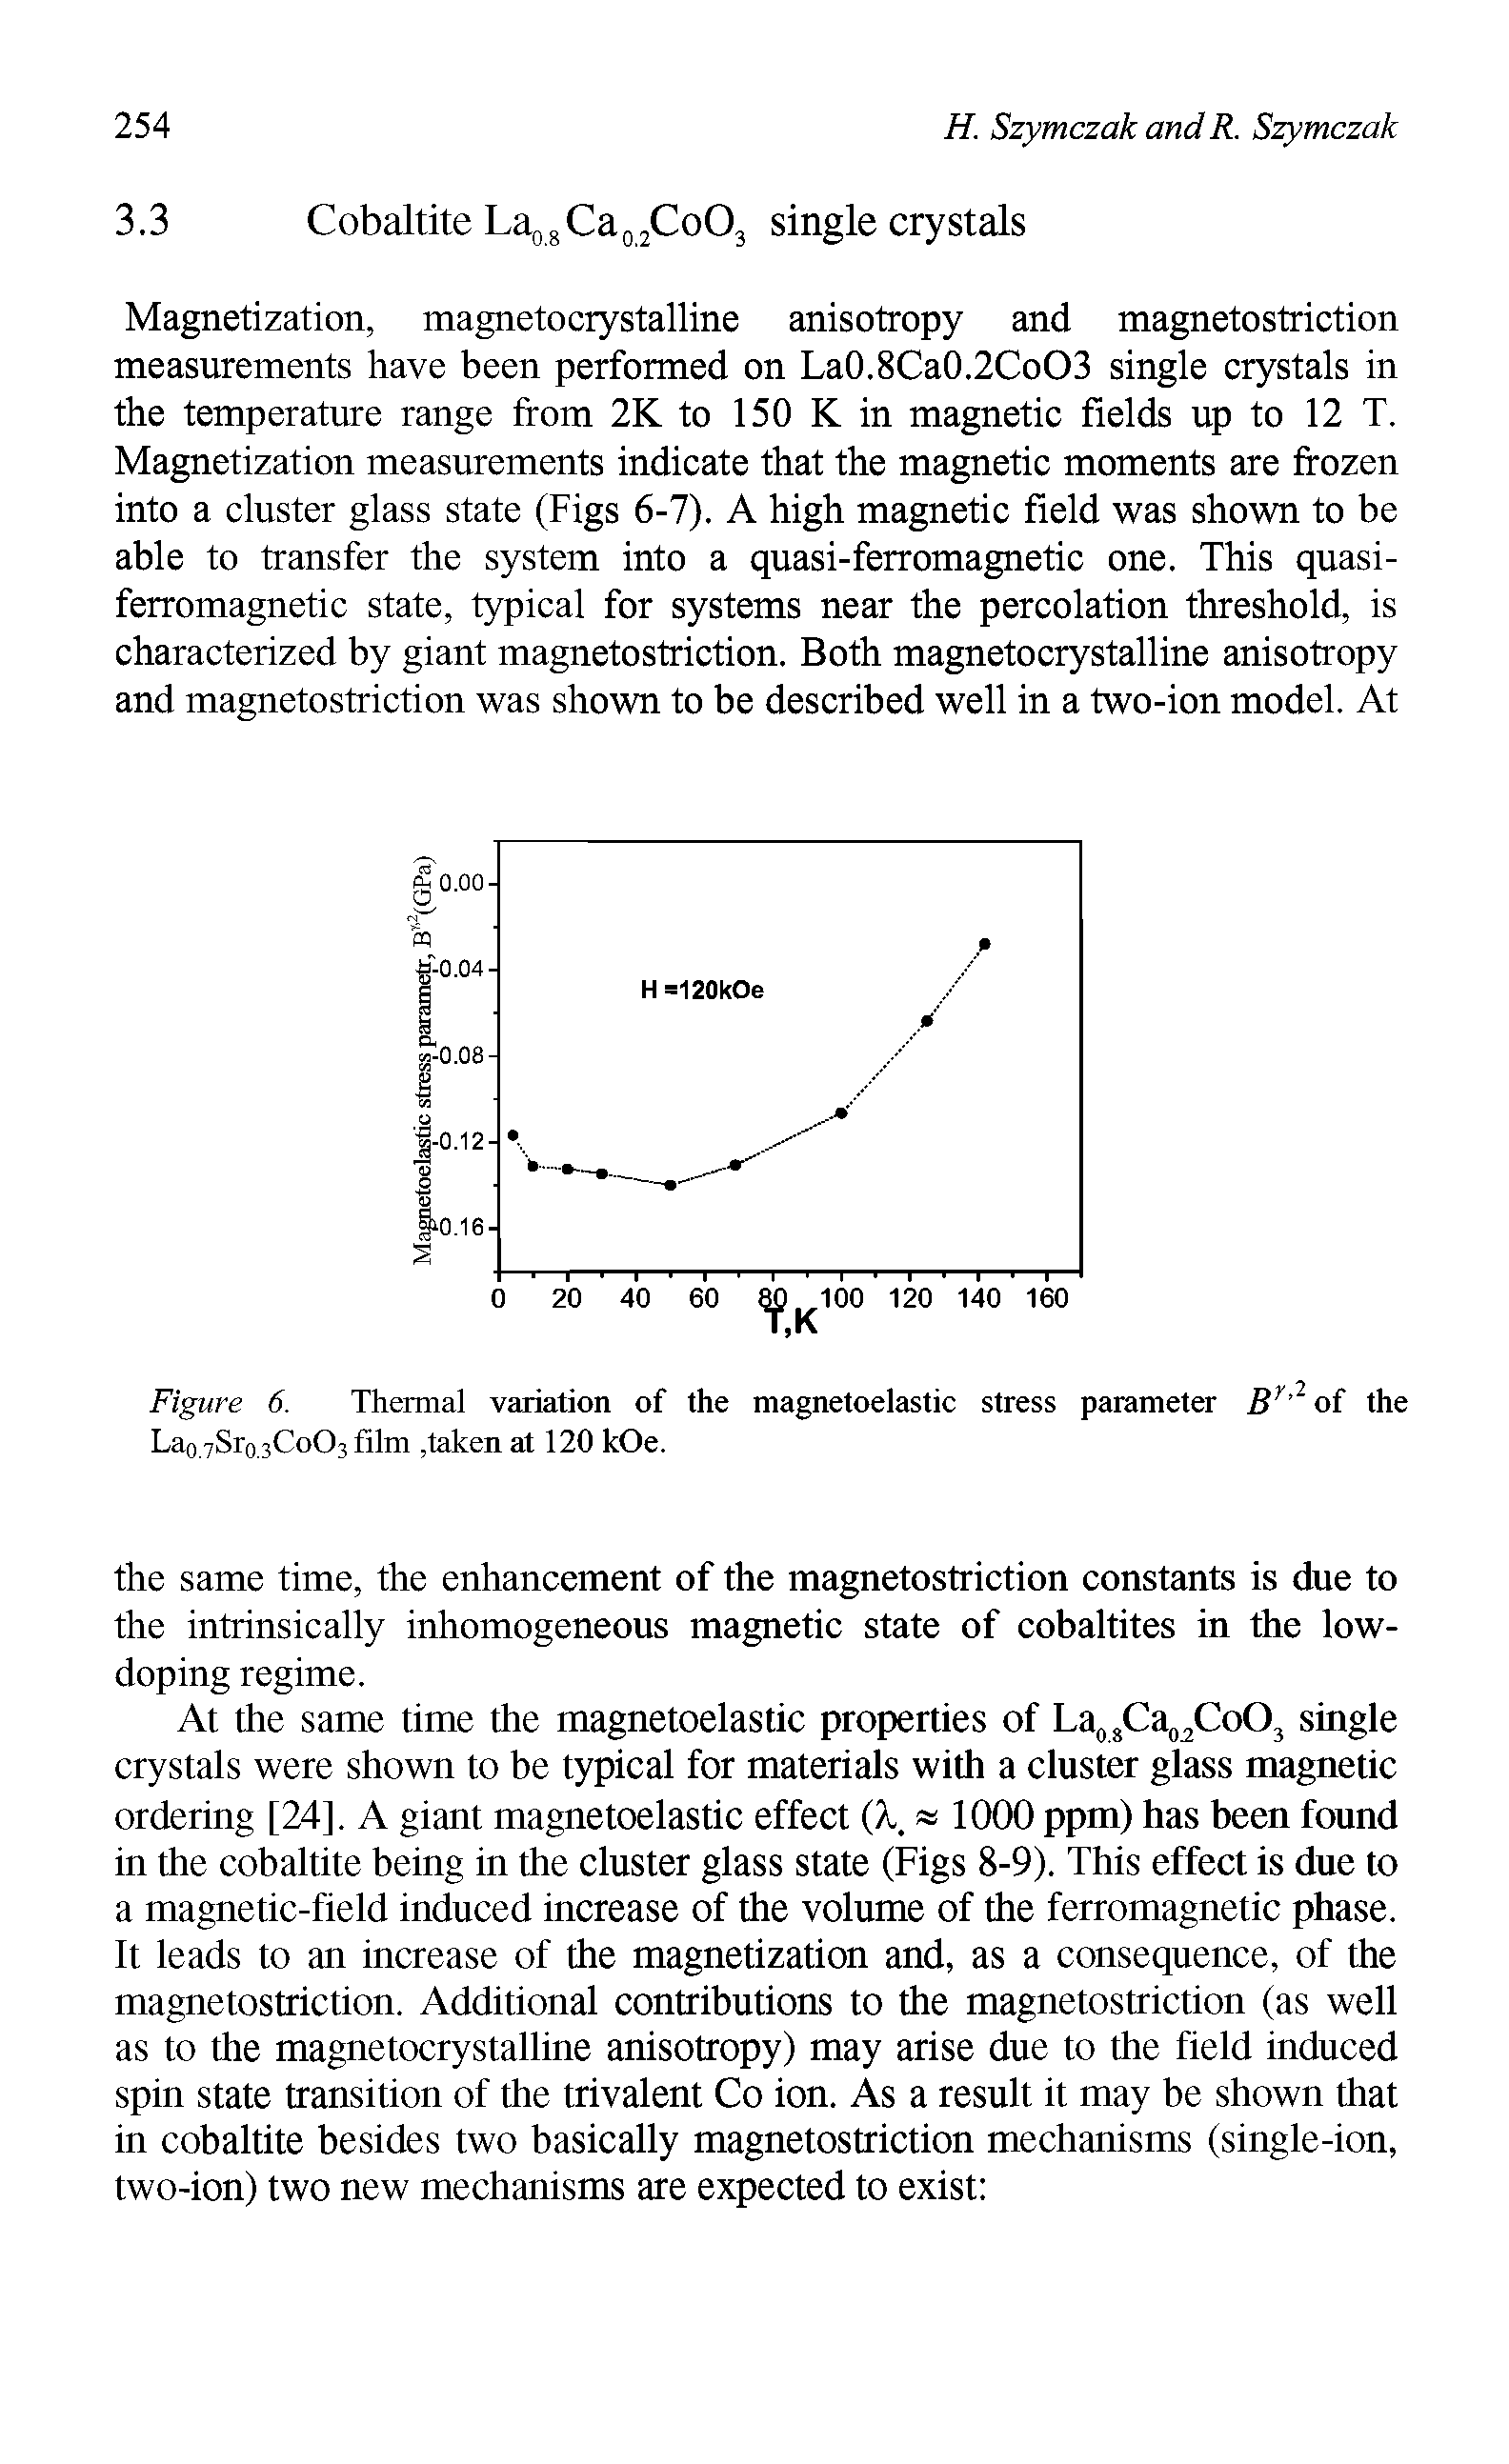 Figure 6. Thermal variation of the magnetoelastic stress parameter Br 2 of the La0 7Sr0 3C0O3 film. taken at 120 kOe.